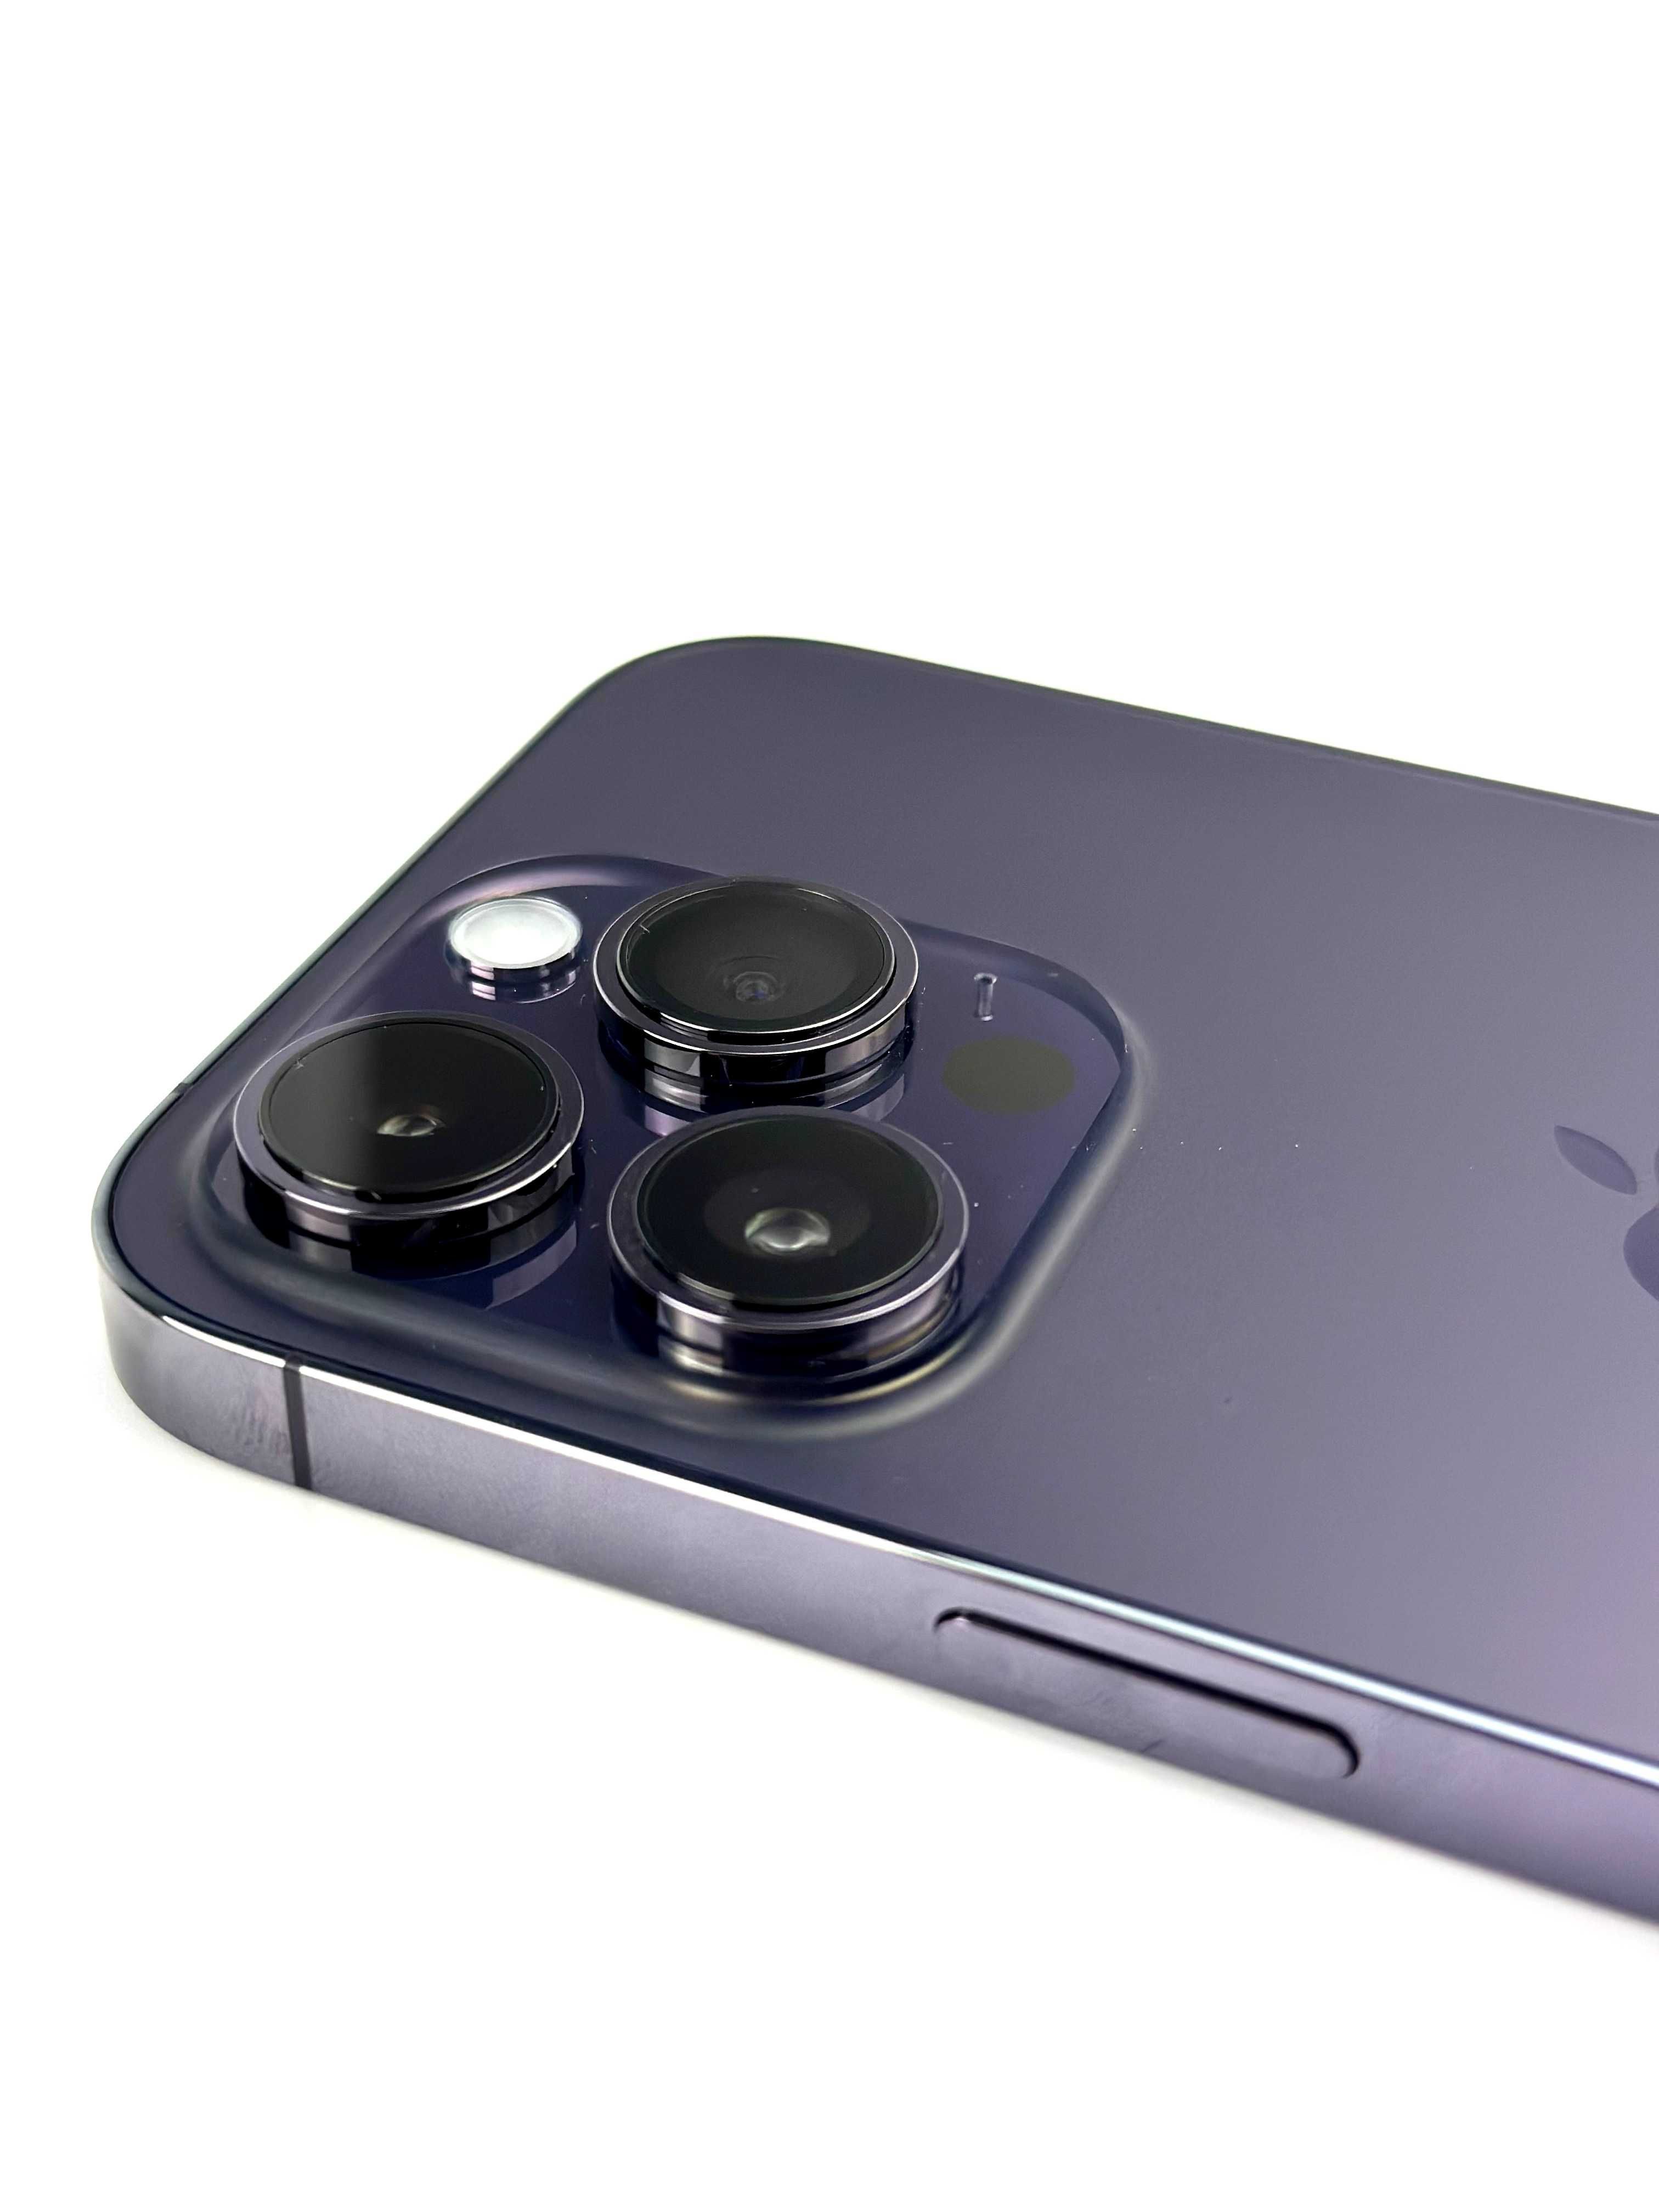 Apple iPhone 14 Pro 256 gb / Deep Purple / Jak Nowy / Gwarancja / Raty